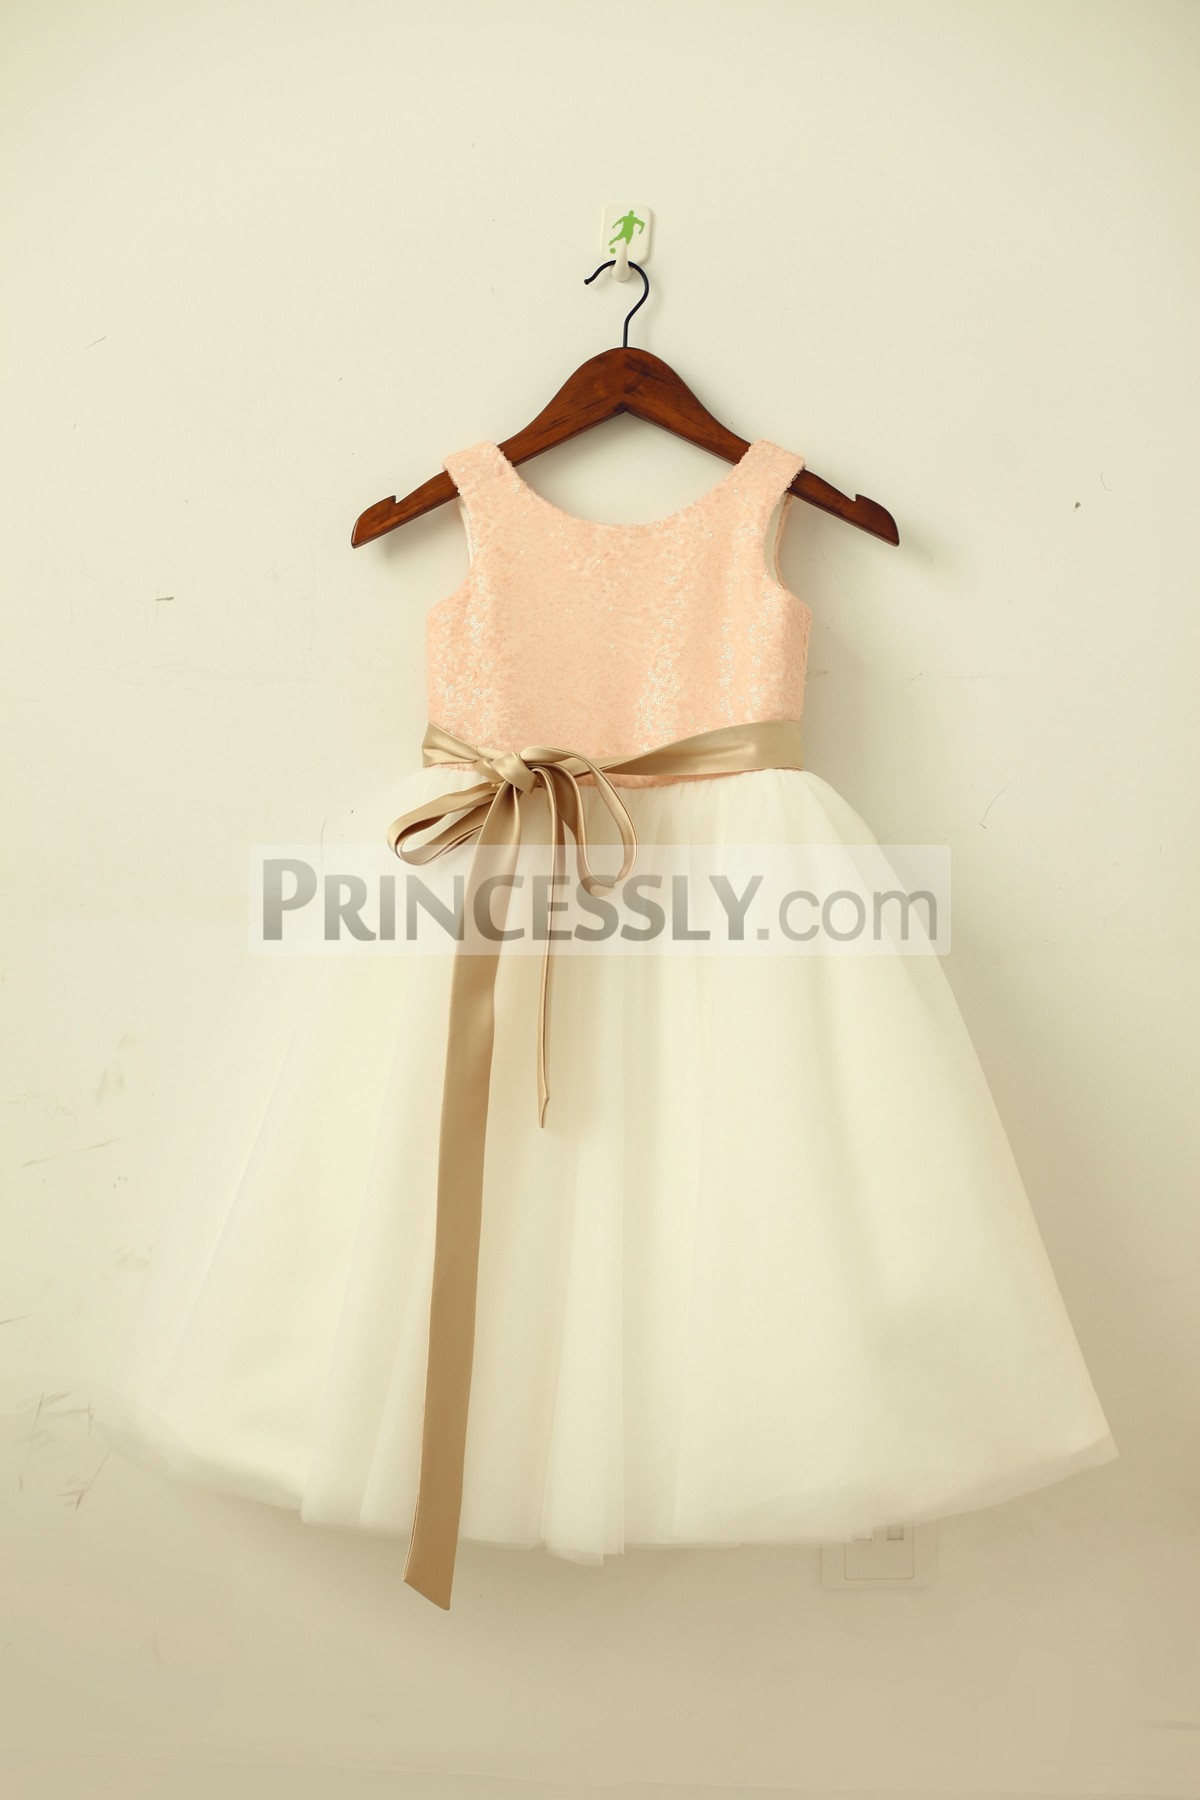 Princessly.com-K1003203-Blush Pink/Gold Sequin Ivory Tulle Flower Girl Dress with navy/champagne sash-31